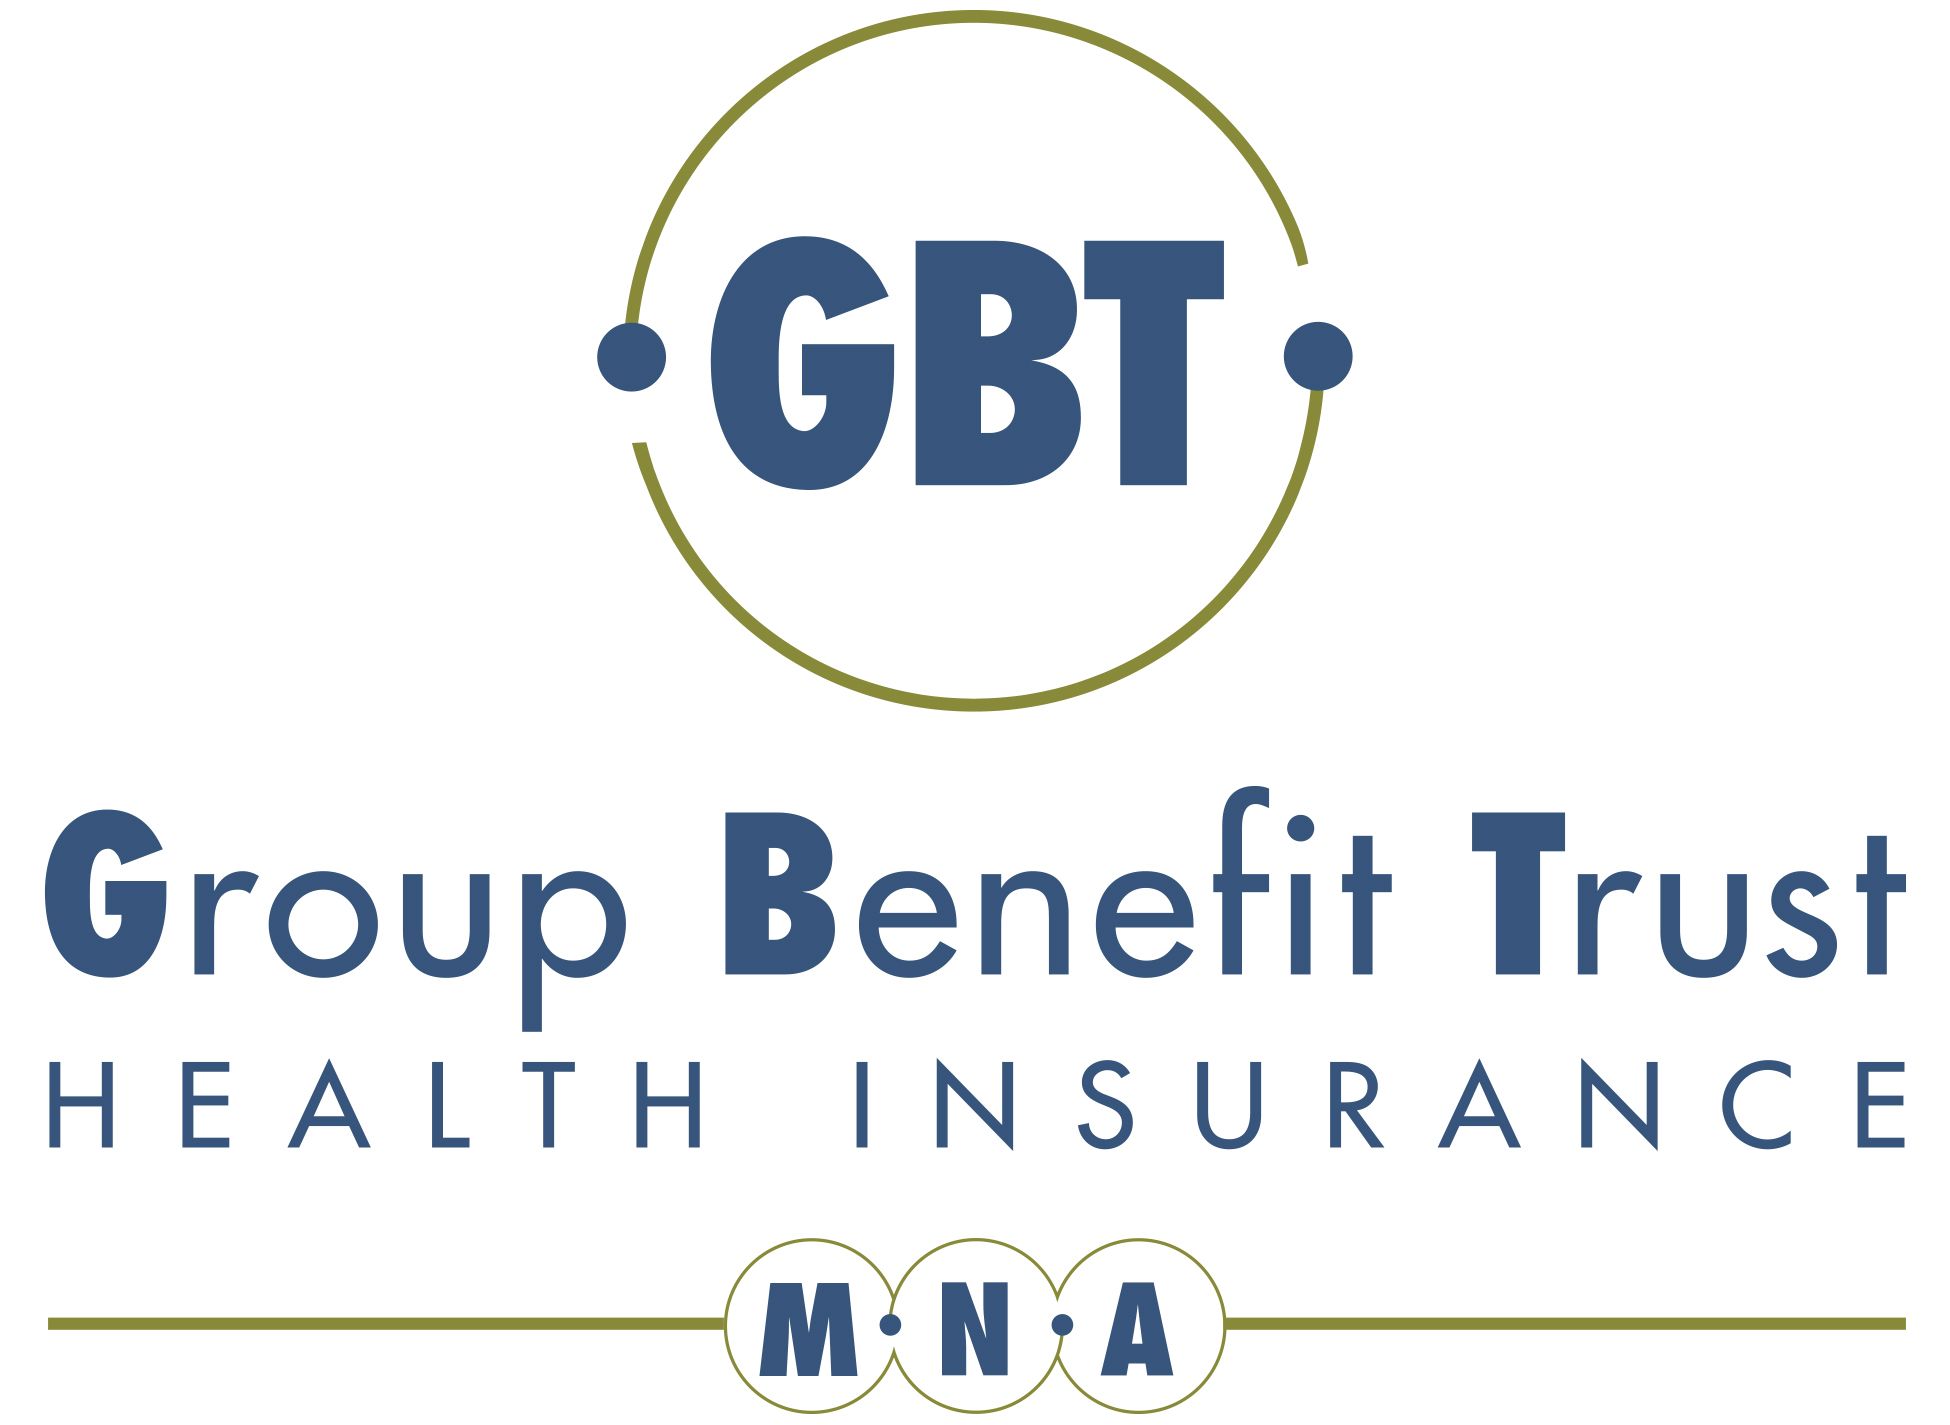 Group Benefit Trust